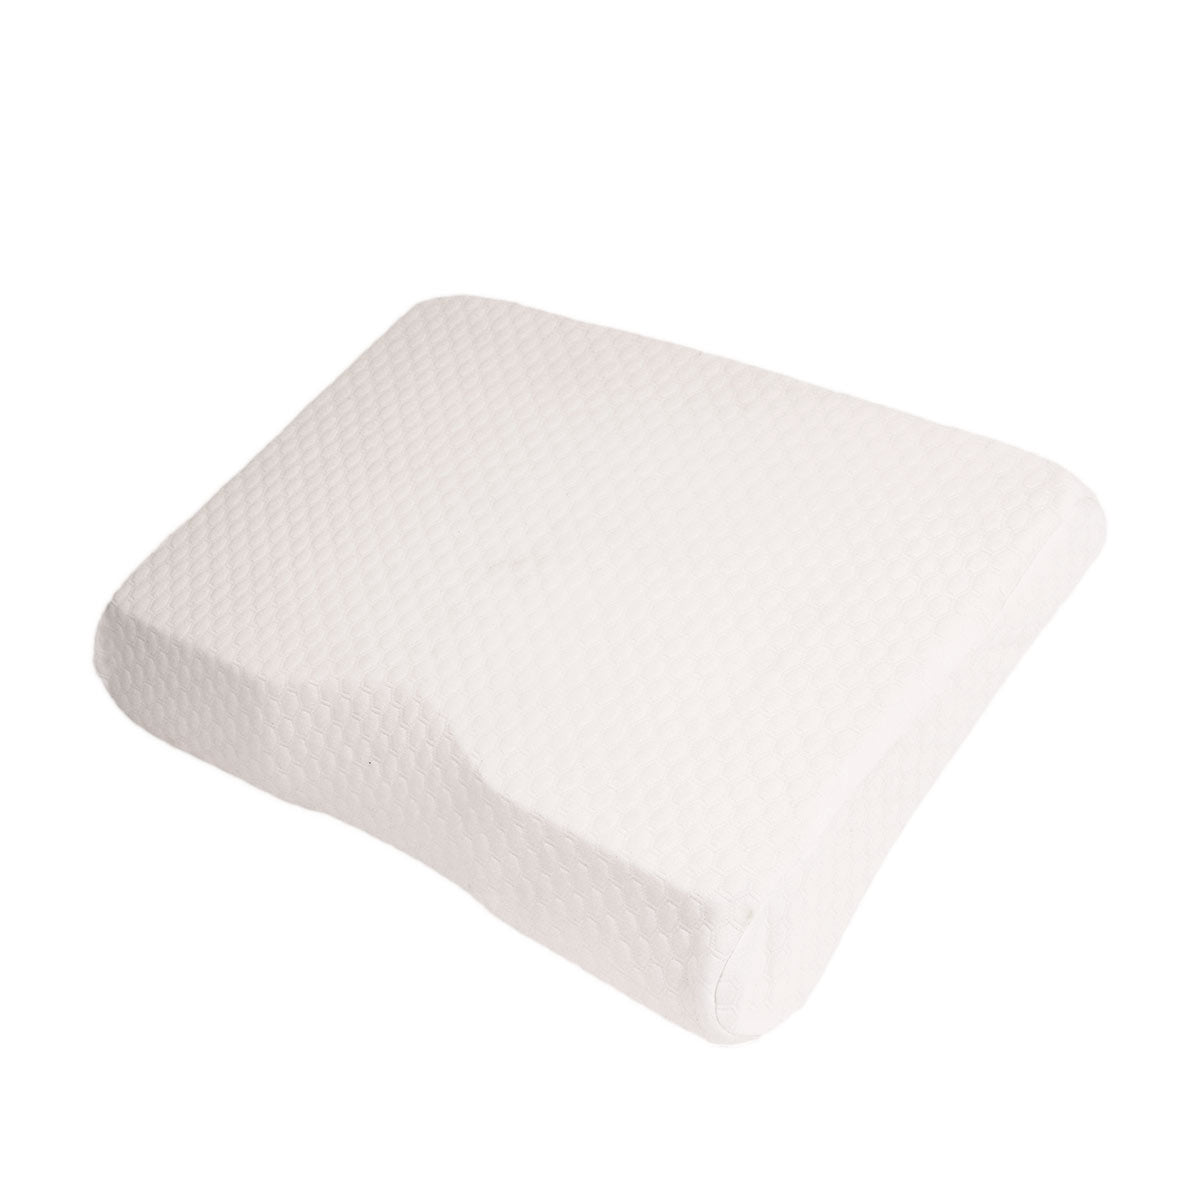 Wholesale Snore-Free Tech Pillow